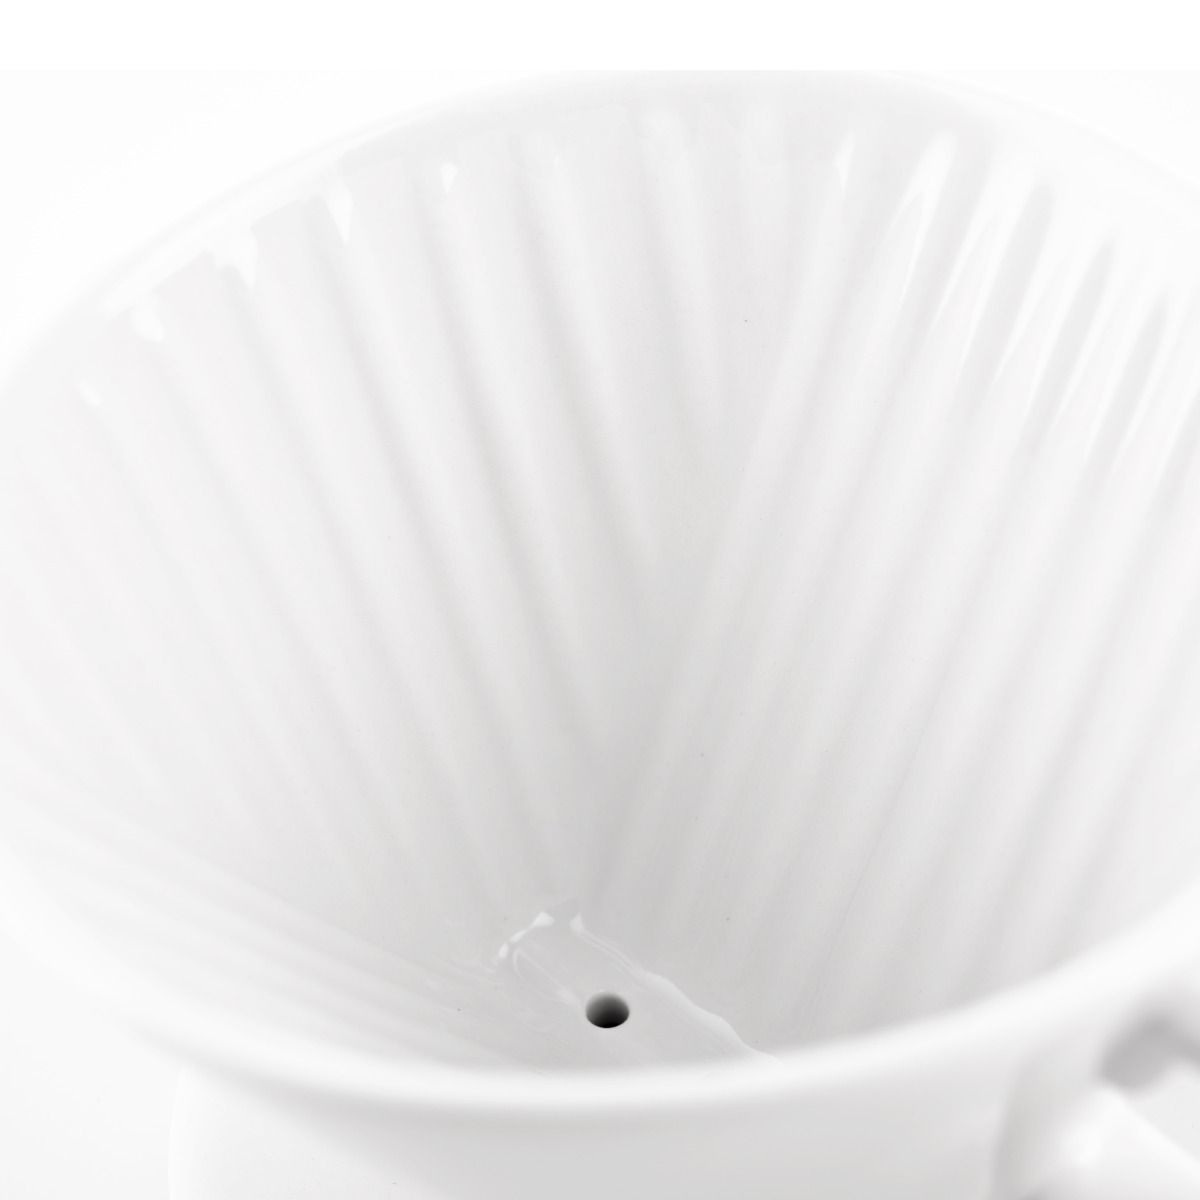 Kalita Style 102 Ceramic Coffee Dripper - White